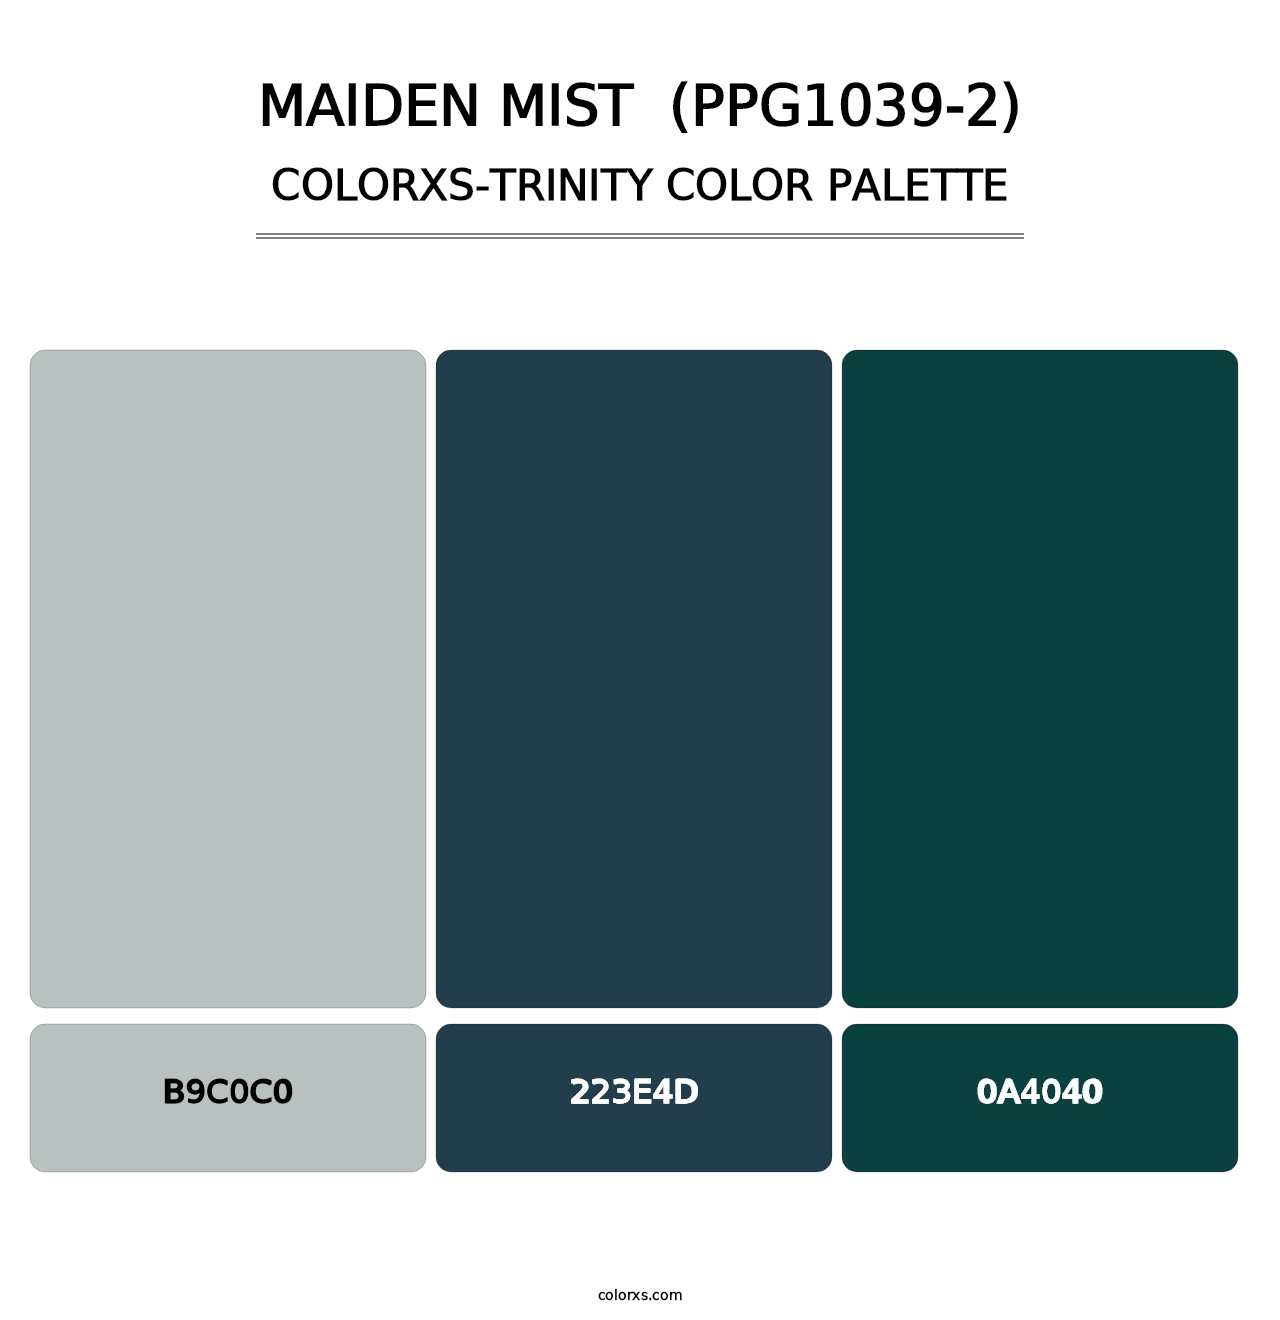 Maiden Mist  (PPG1039-2) - Colorxs Trinity Palette